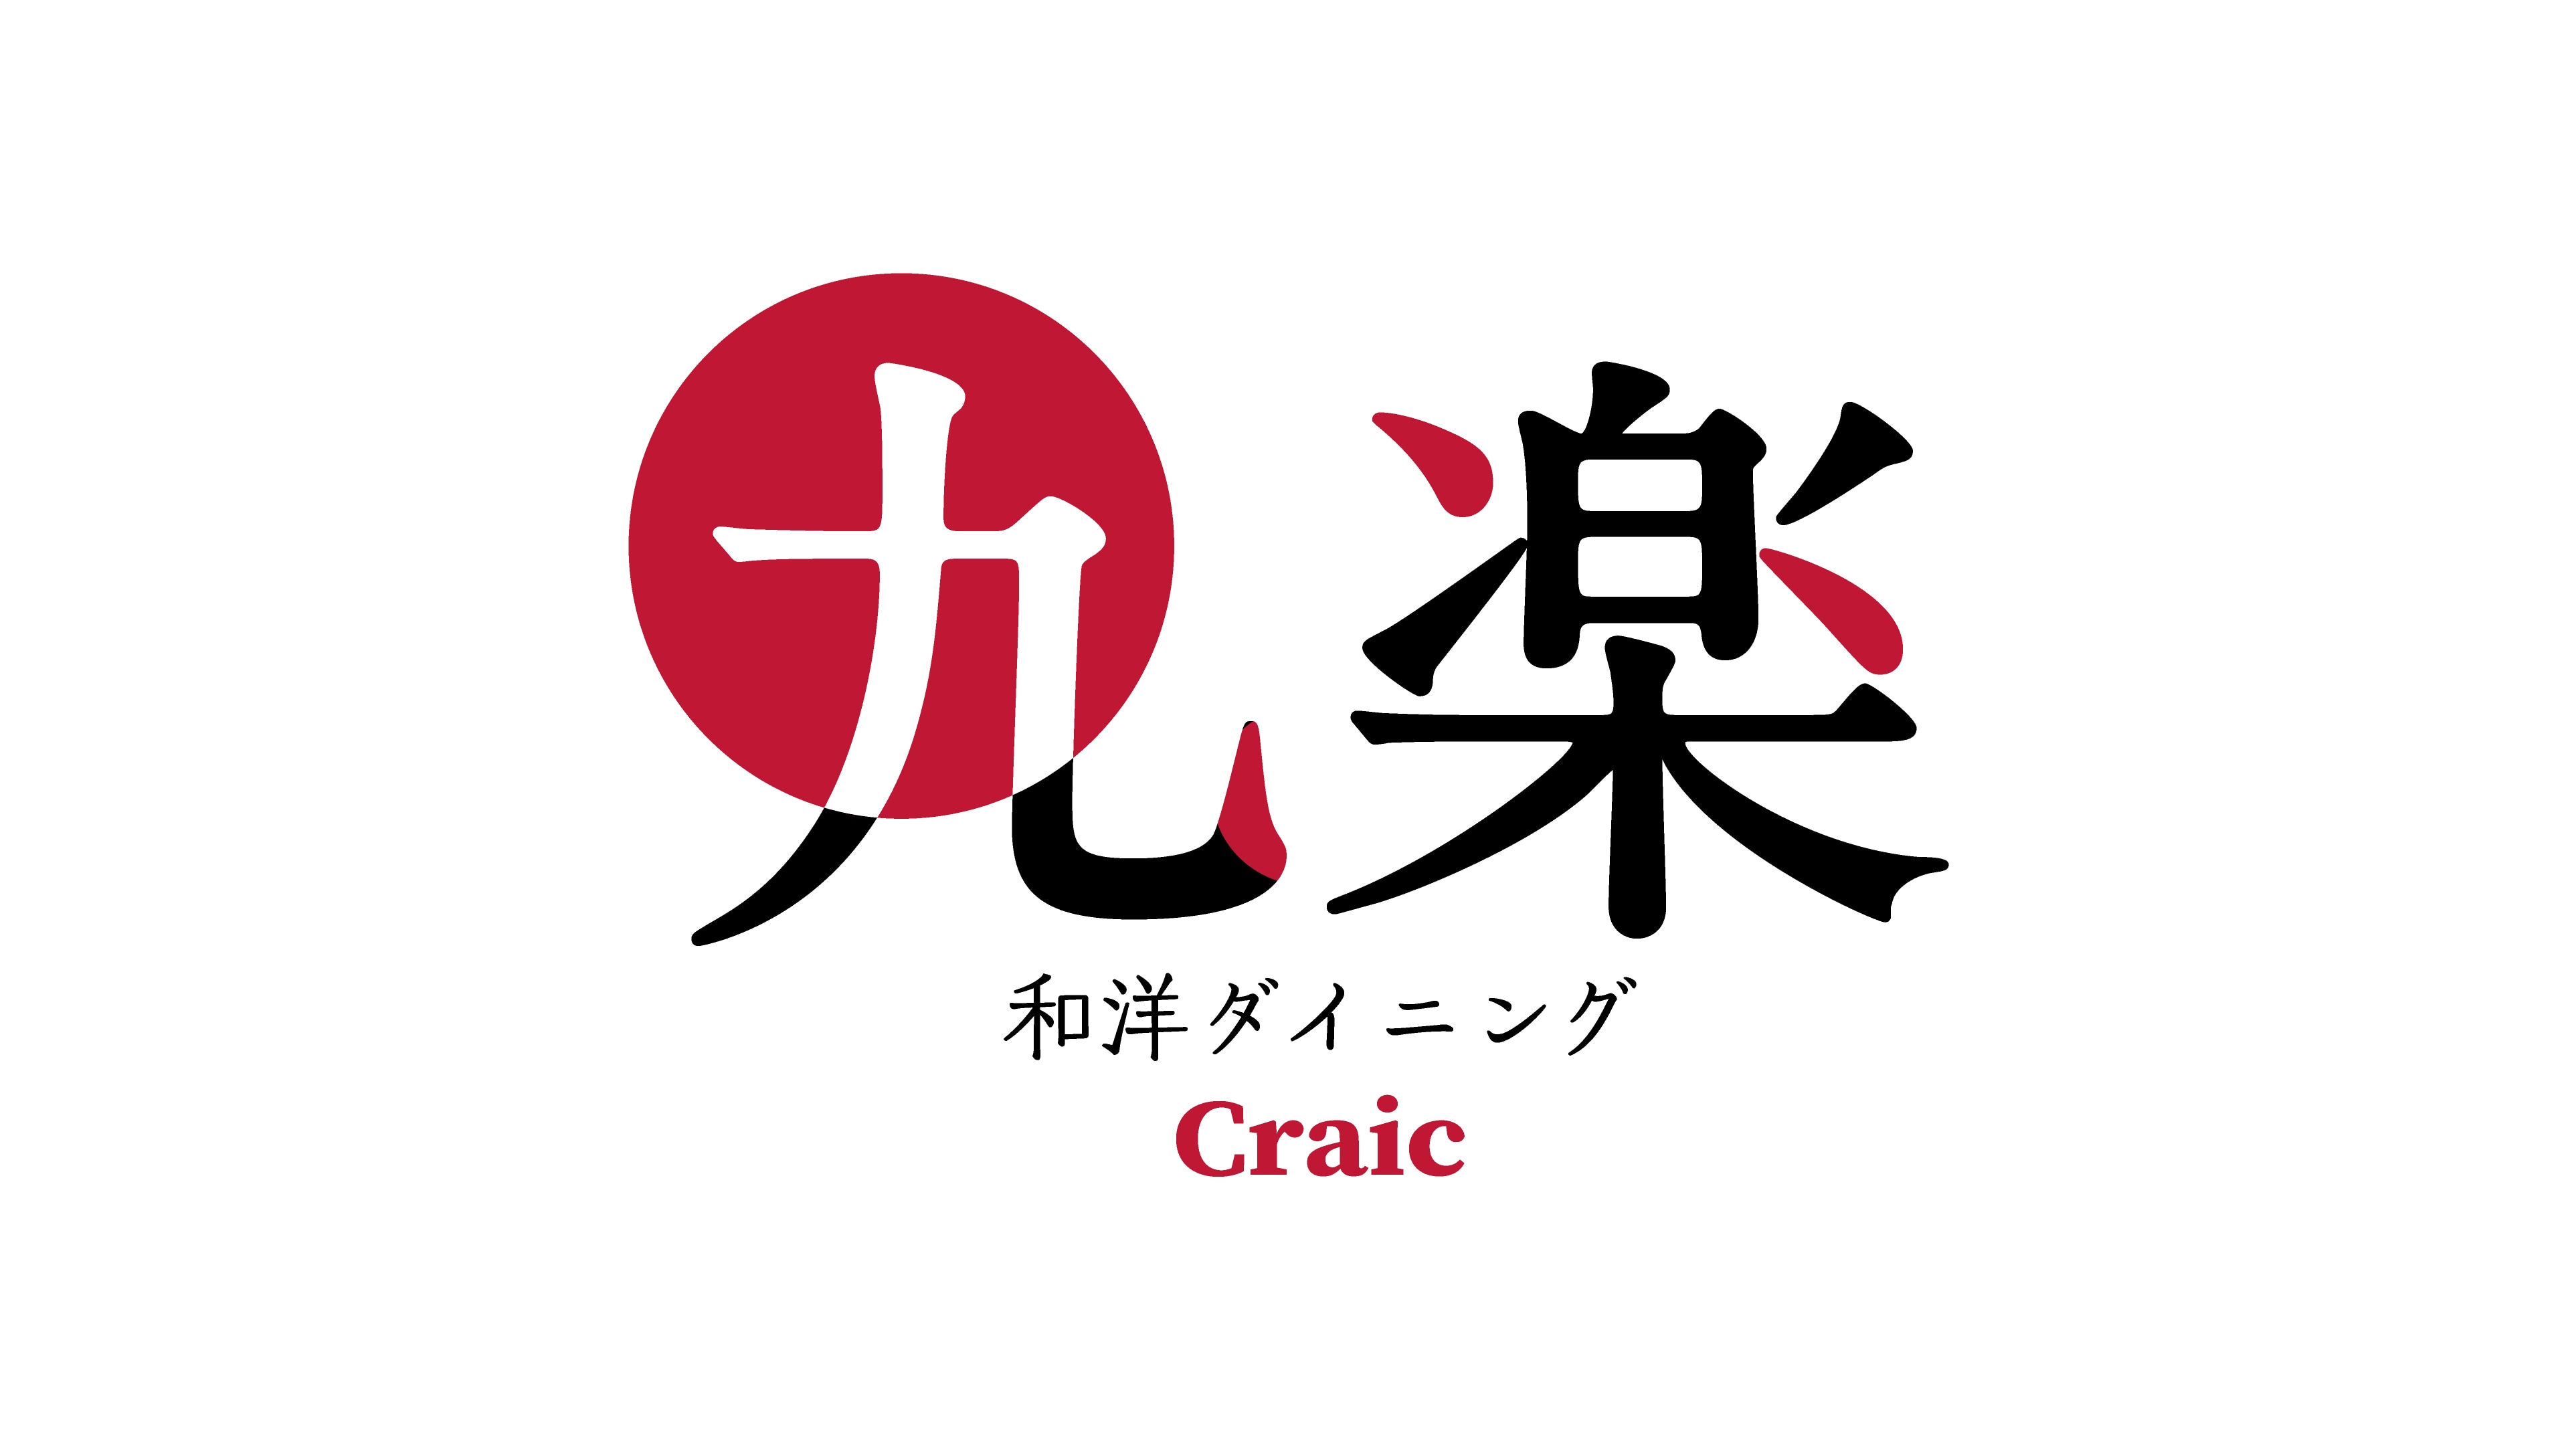 Japanese and Western dining Craic crack